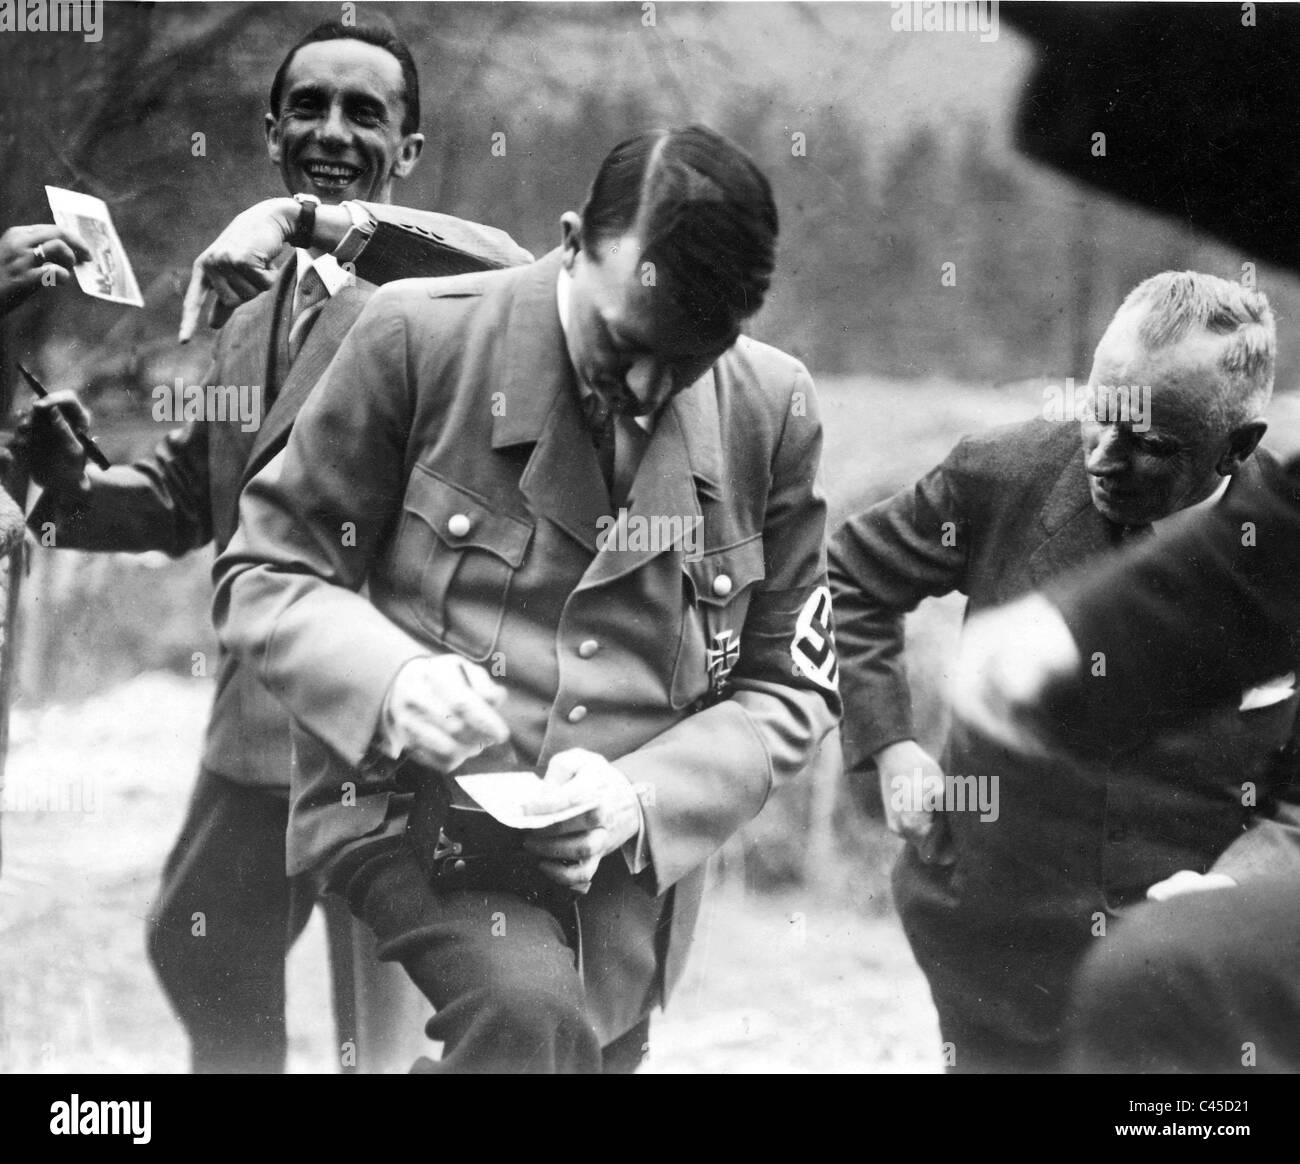 Adolf Hitler and Joseph Goebbels signing autographs Stock Photo